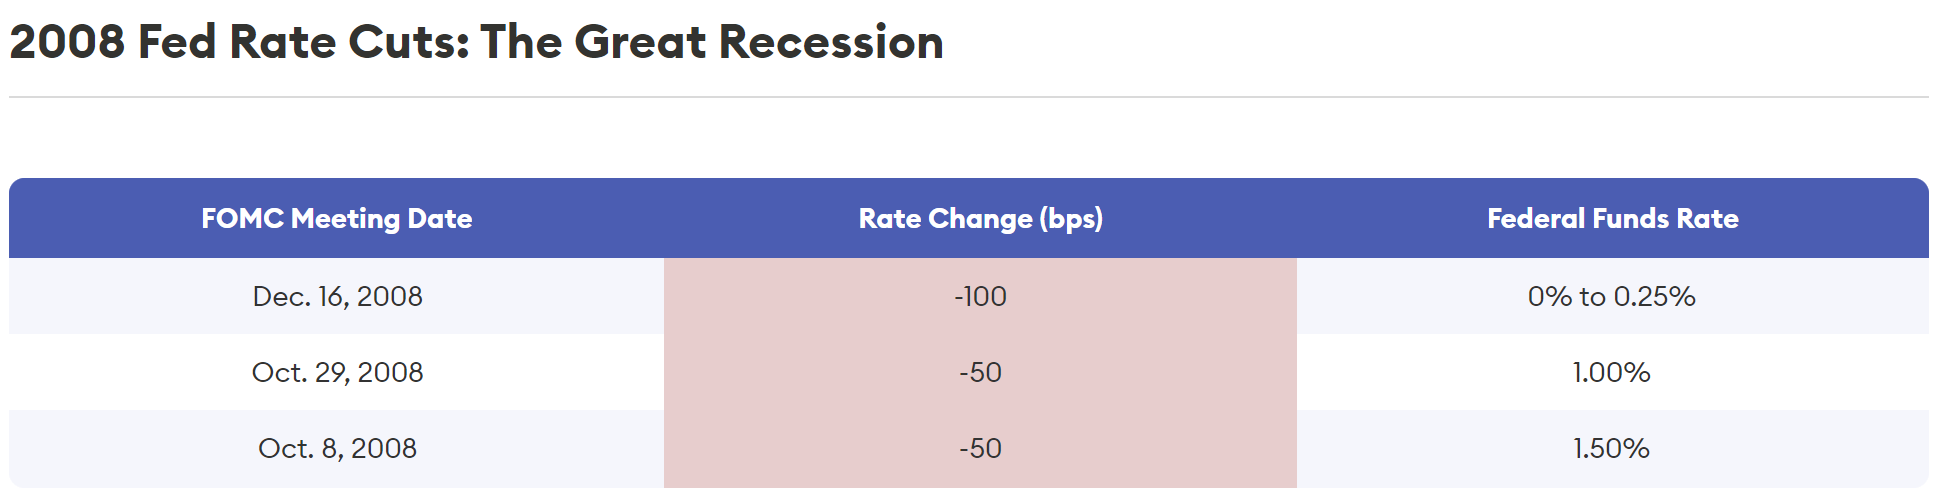 Fed rate cuts 2008